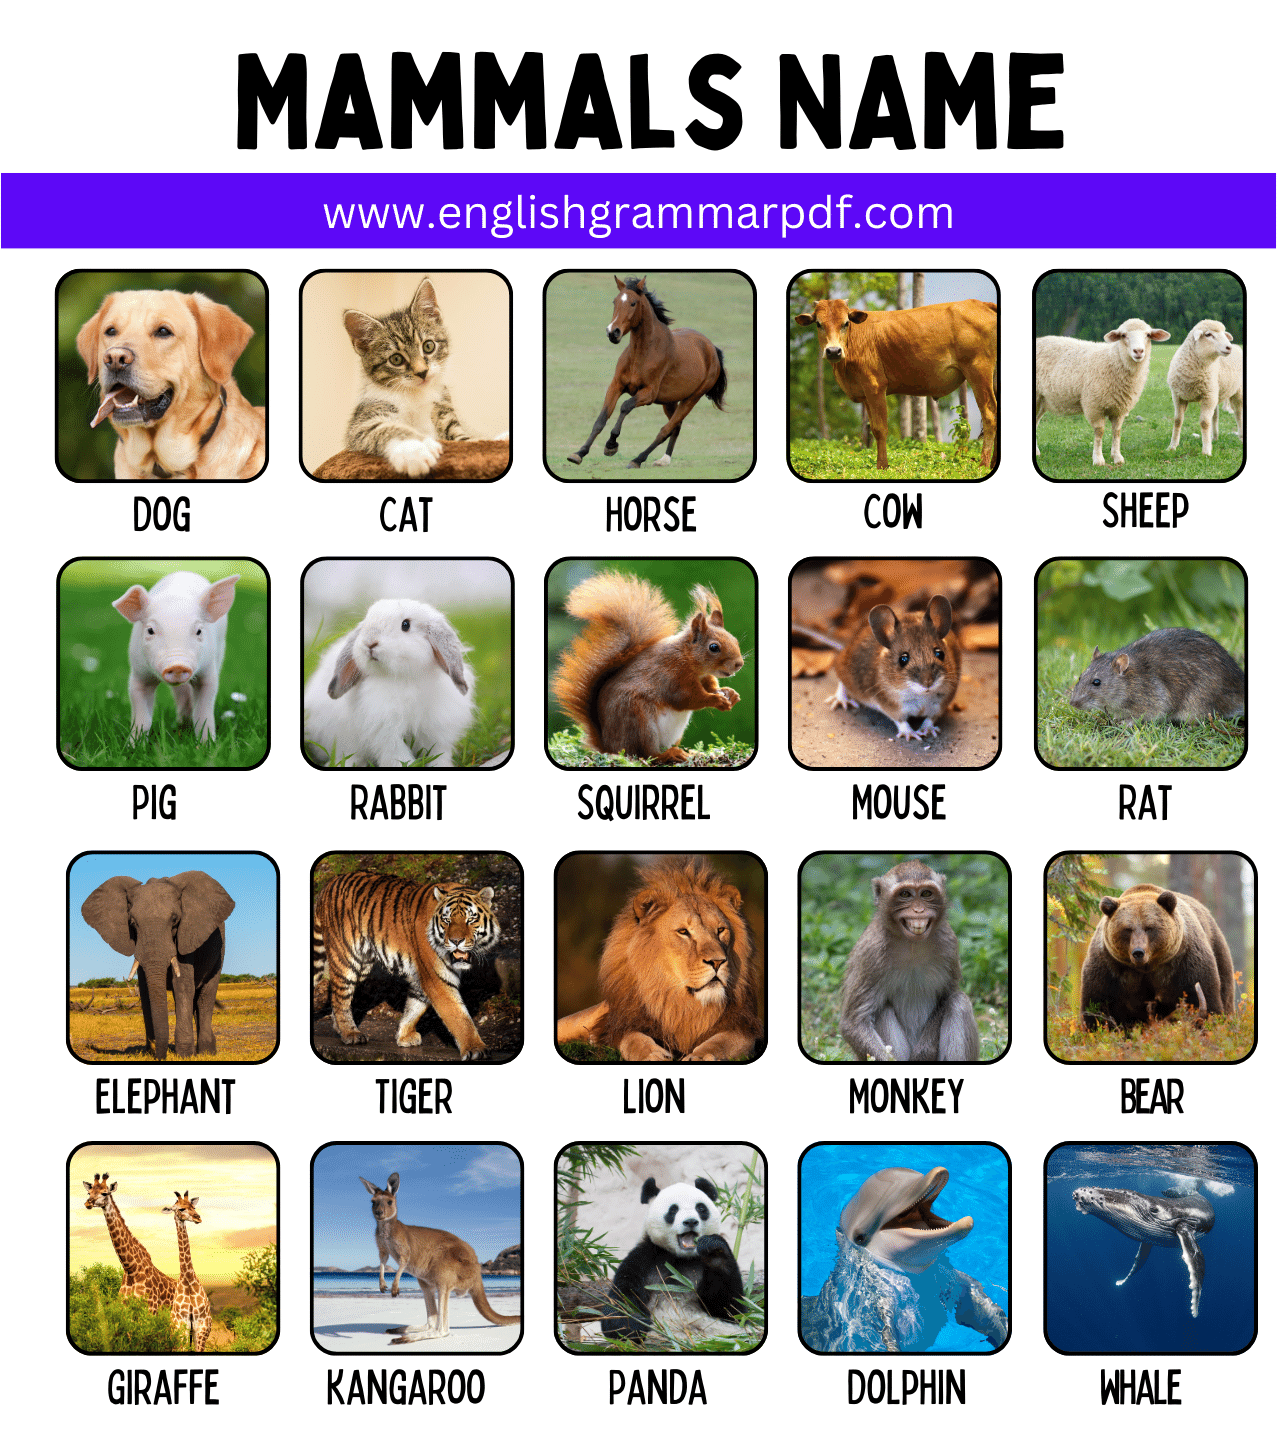 Mammals NAme